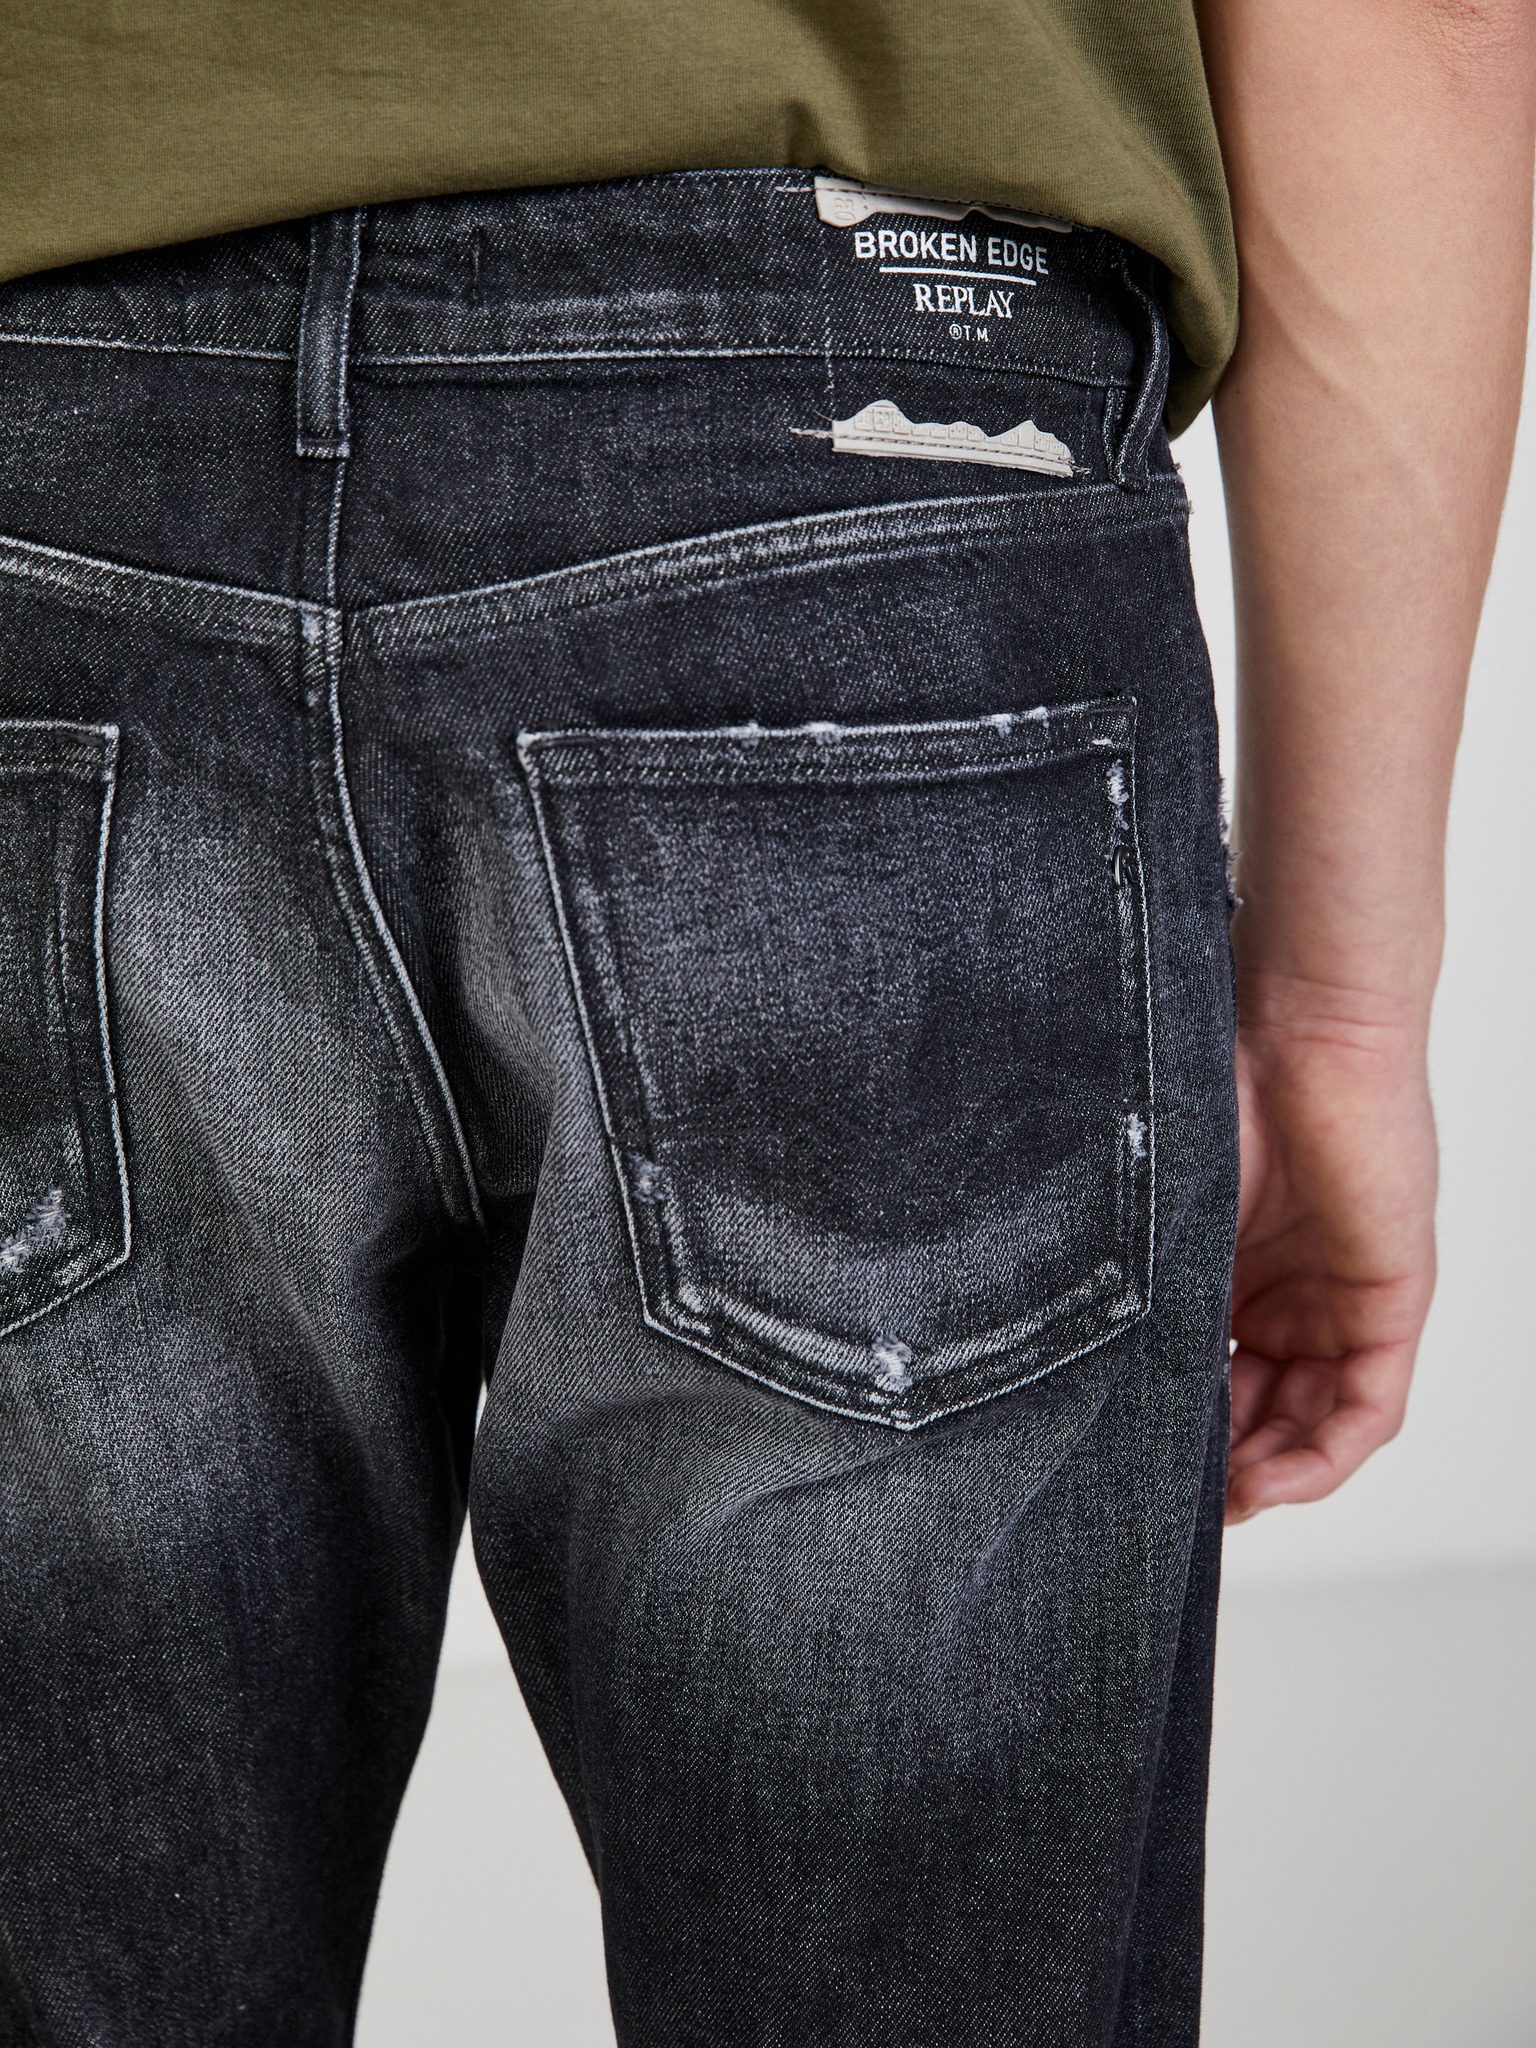 Replay Maestro Selection Regular Slim Fit Jeans for Men